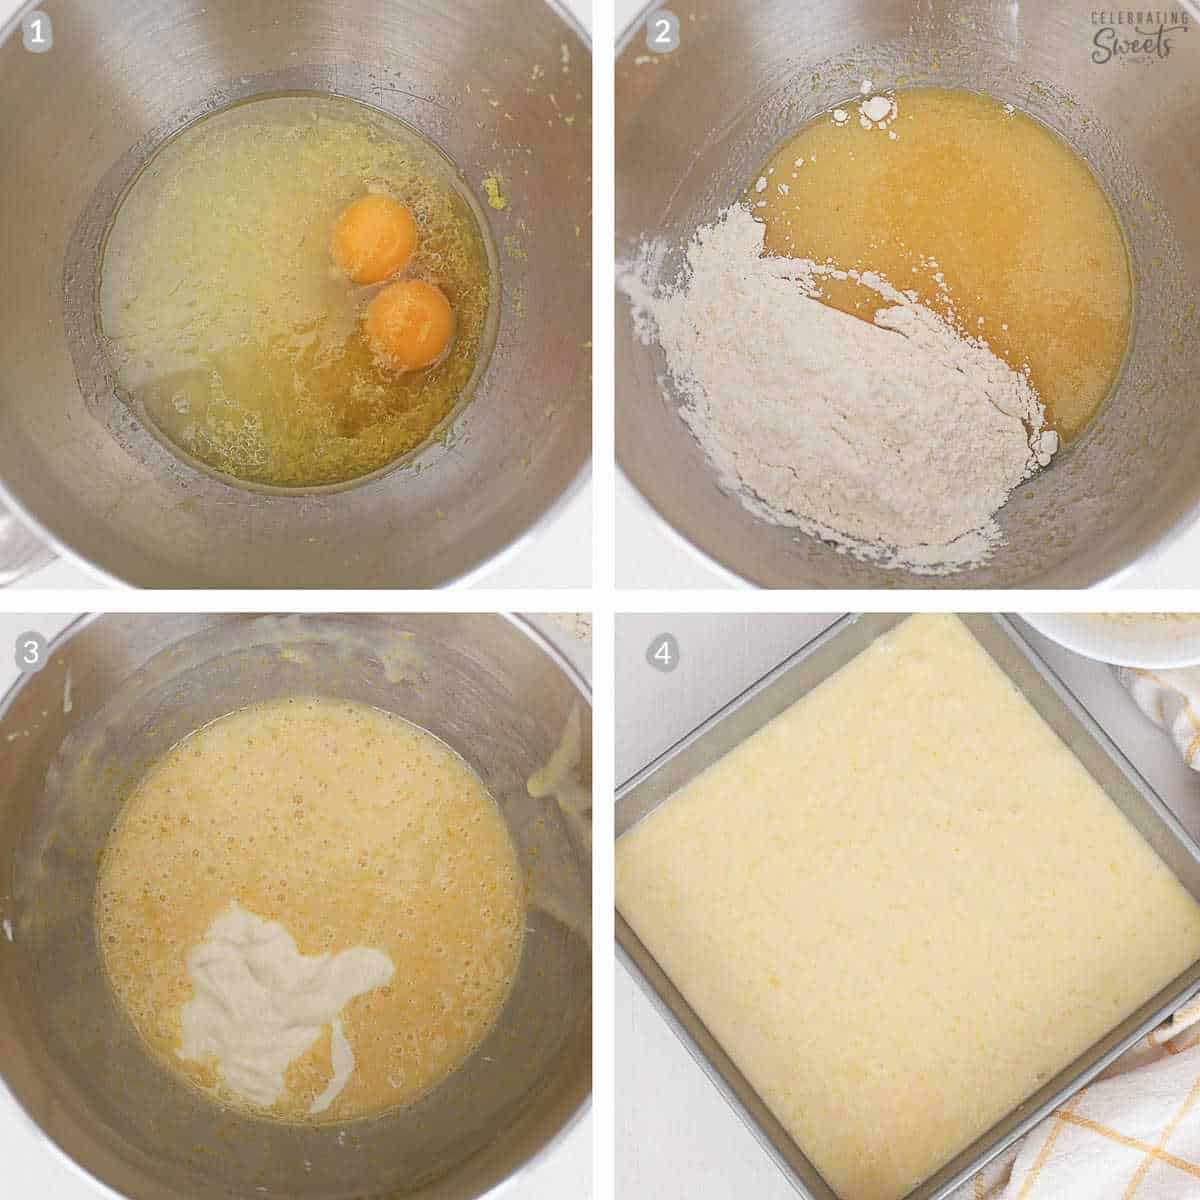 Step by step how to make a lemon cake.